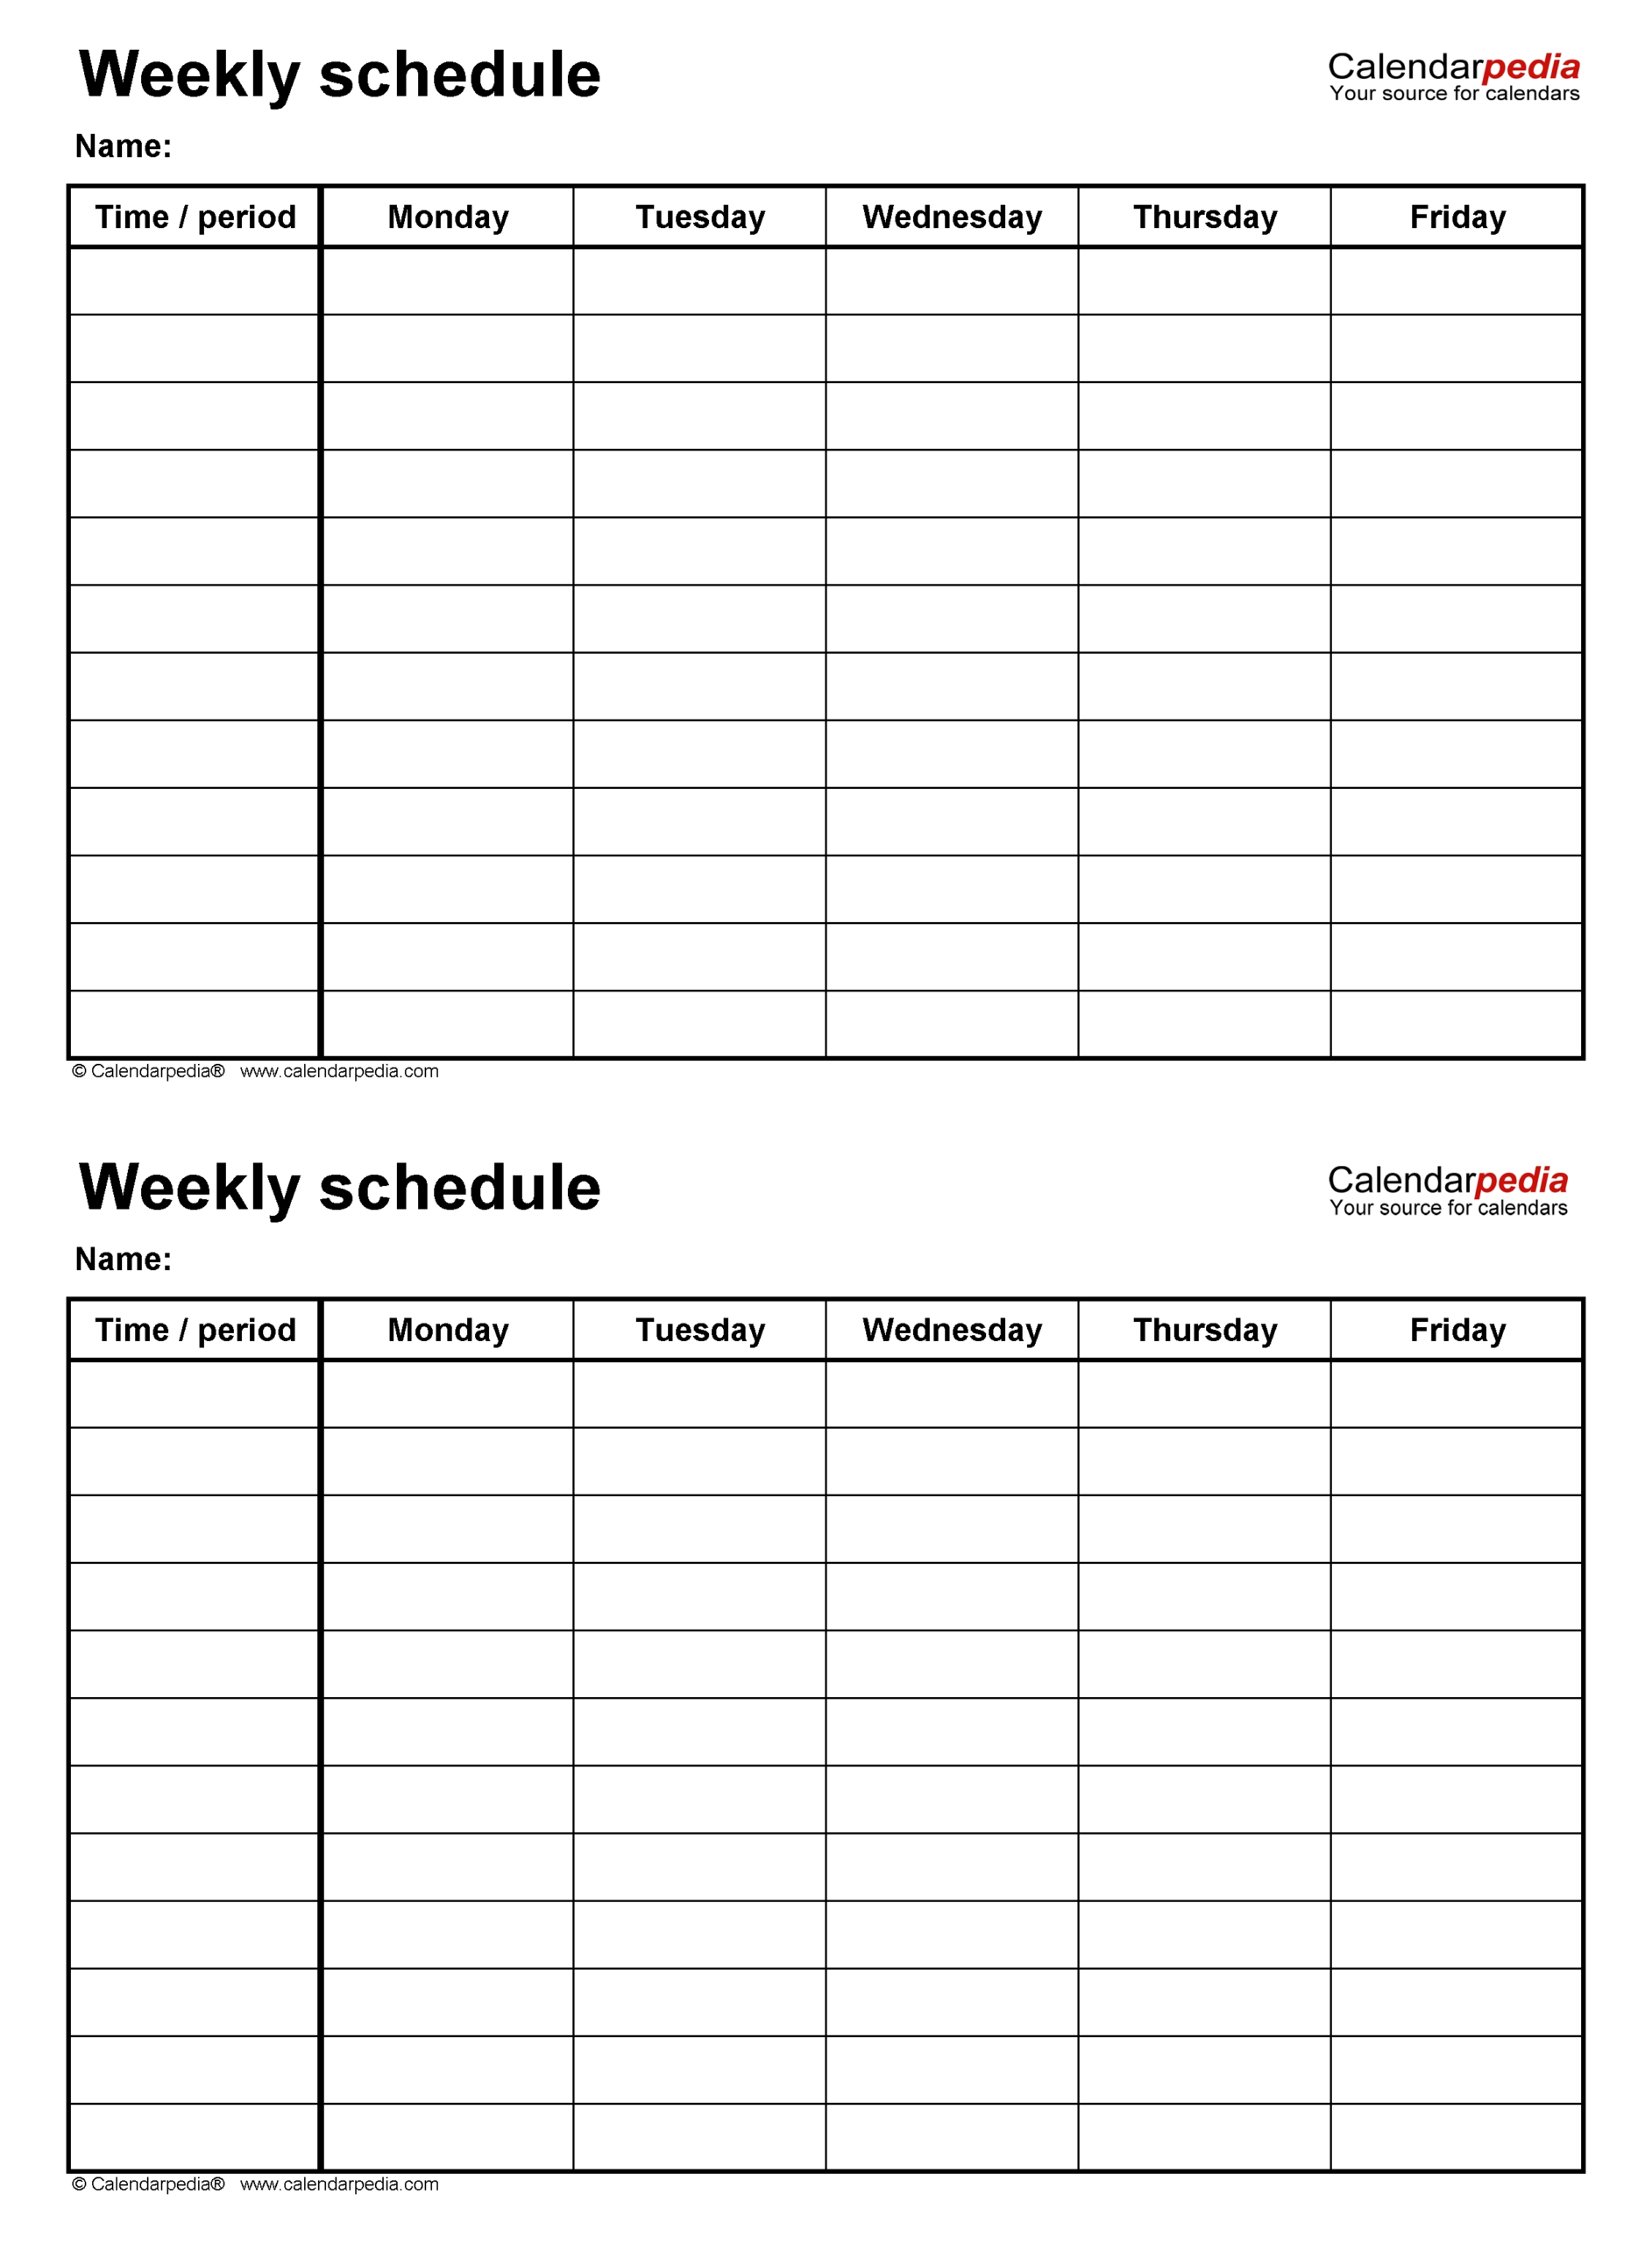 Free 4 Week Blank Calender Template  Get Your Calendar throughout One Week Blank Calendar